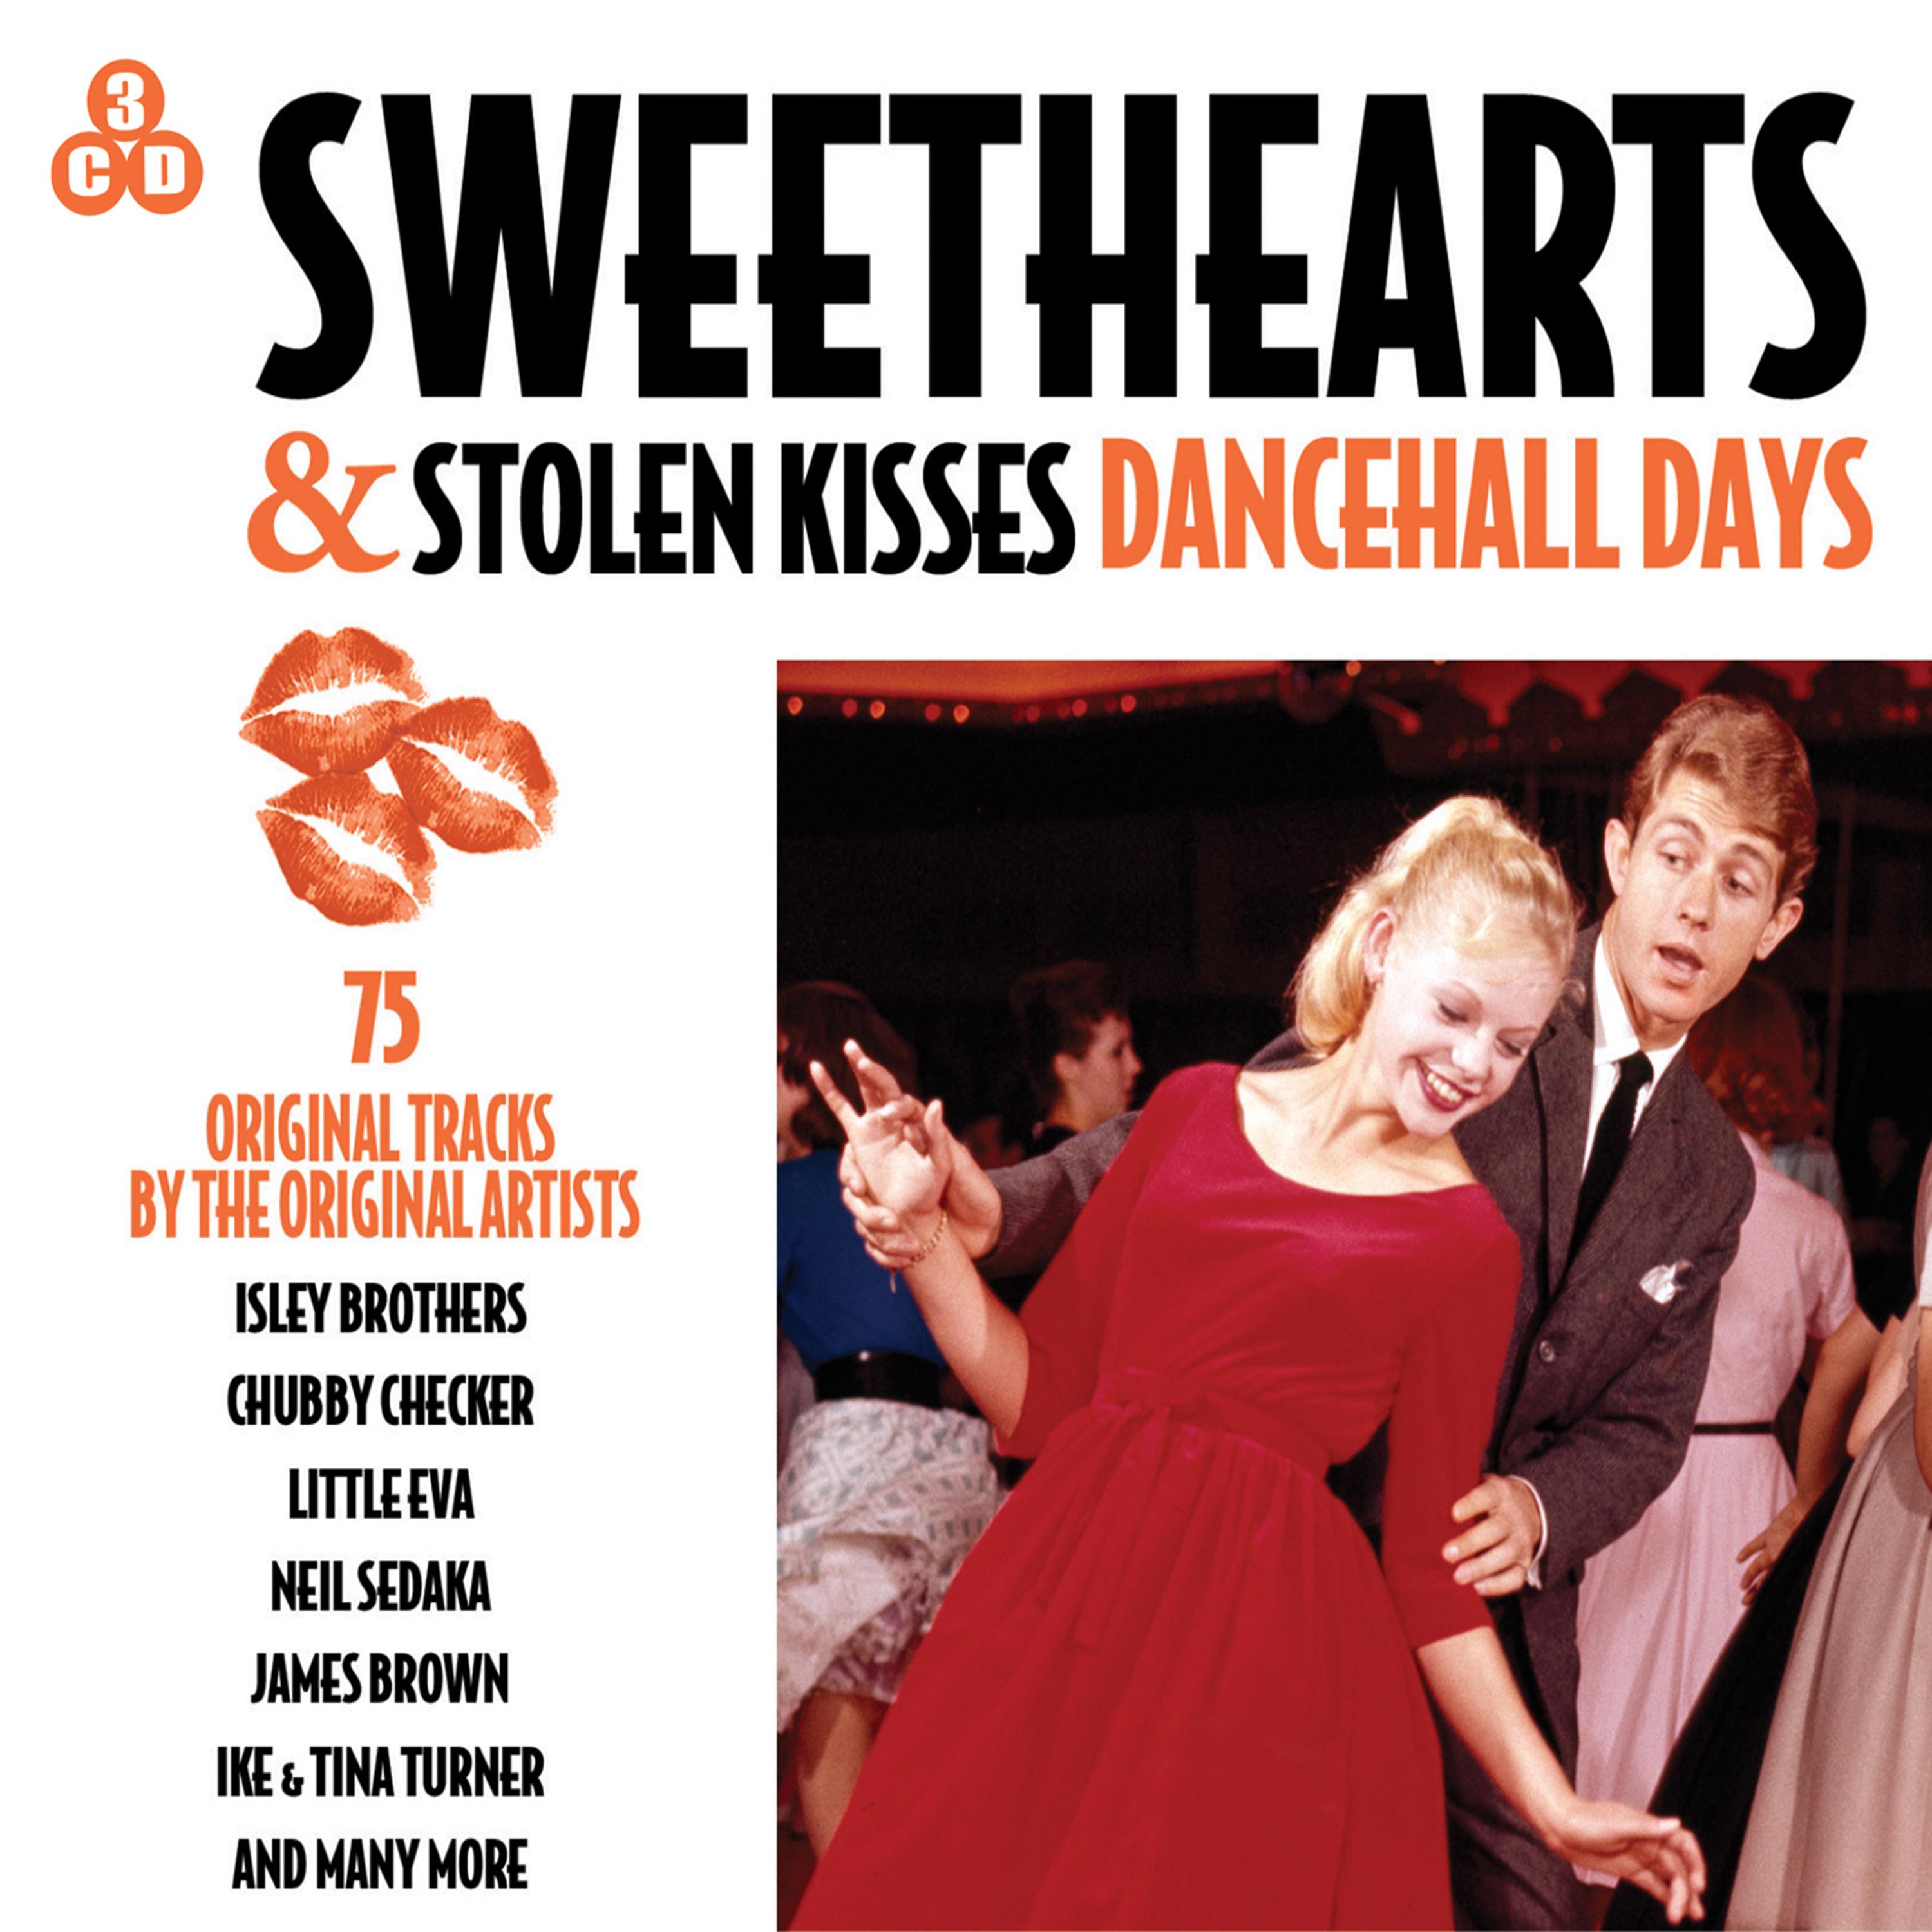 Sweethearts & Stolen Kisses - Dancehall Days